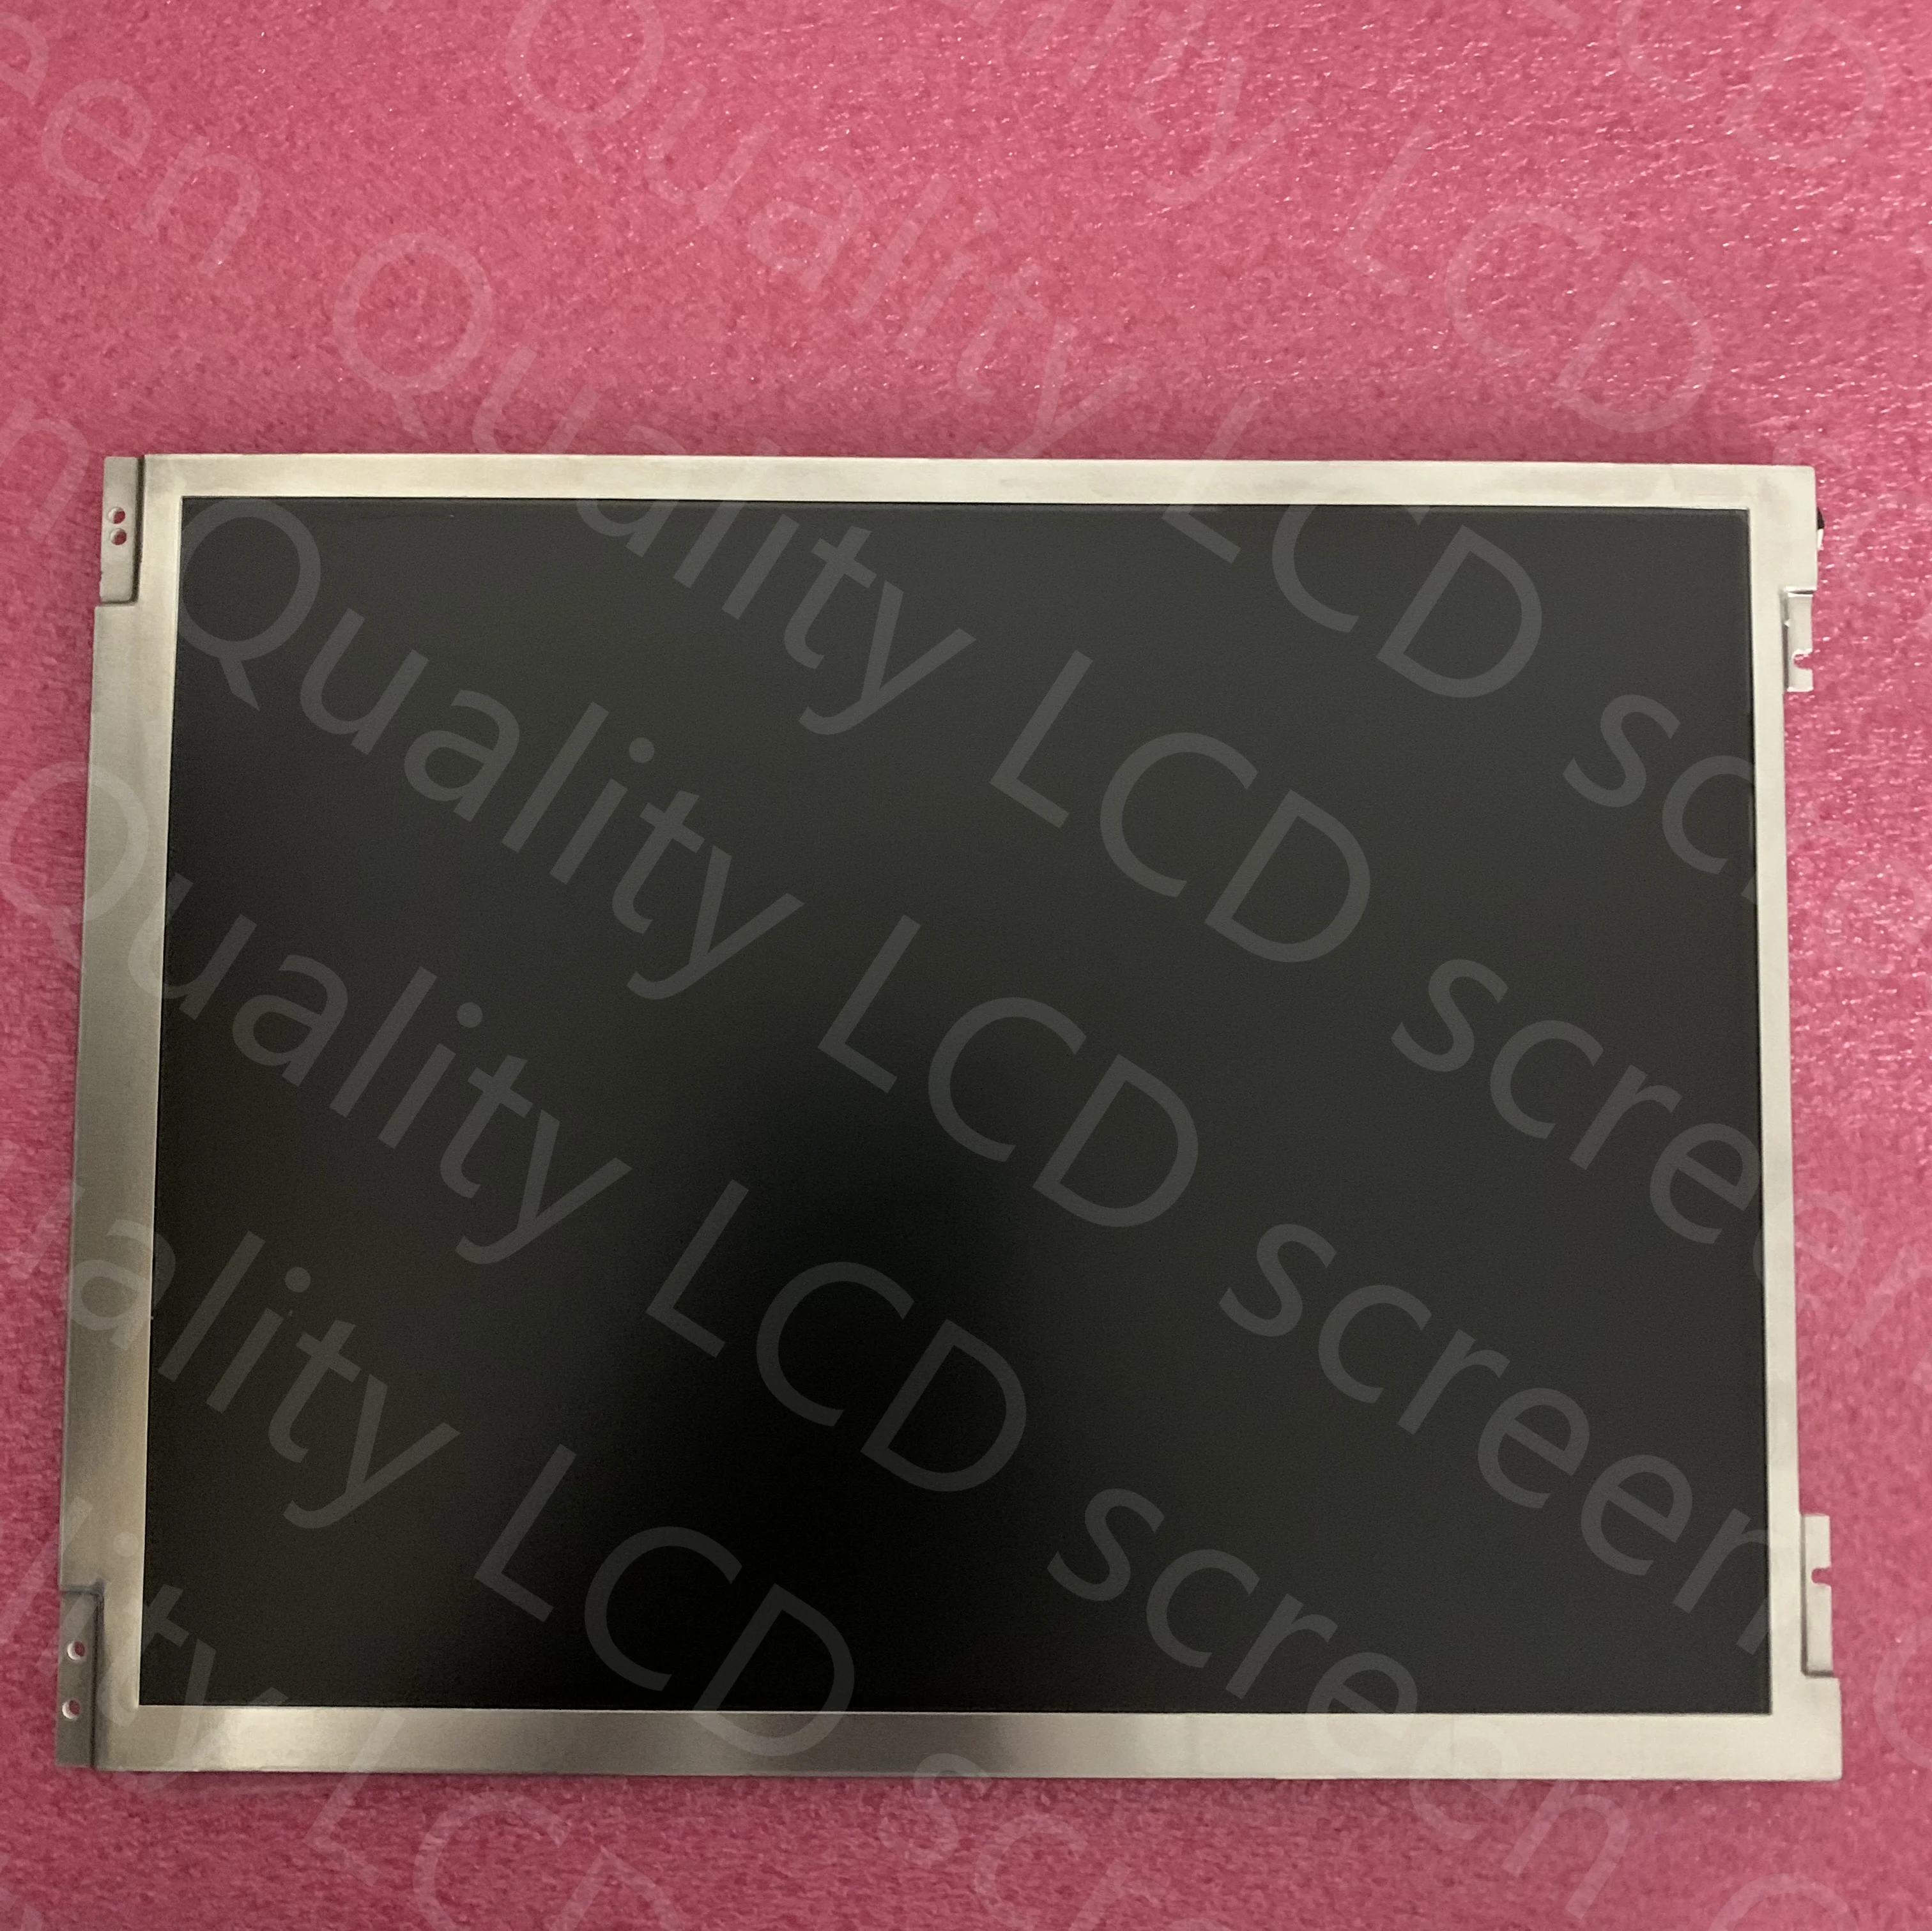 Применимо к, Φ, Φ, TM104SDH01, 800*600 AUO LCD display 180 дней гарантии